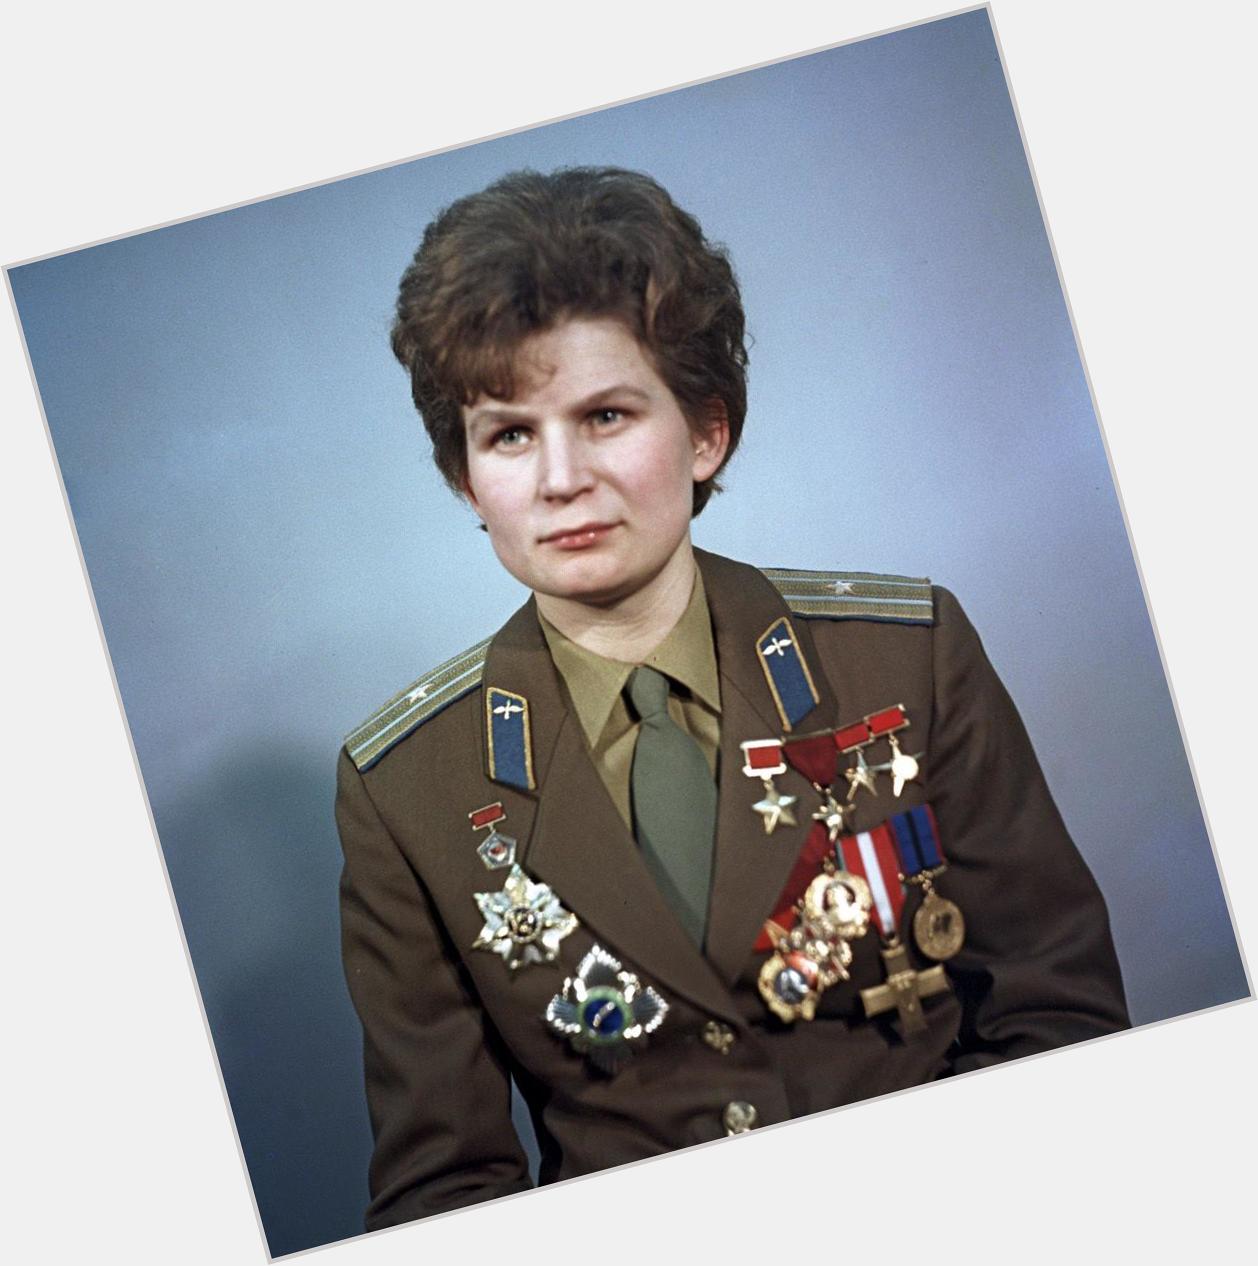 March 6, 1937: Happy Birthday to Valentina Tereshkova, the 1st woman in space (Vostok 6 on June 16, 1963). 